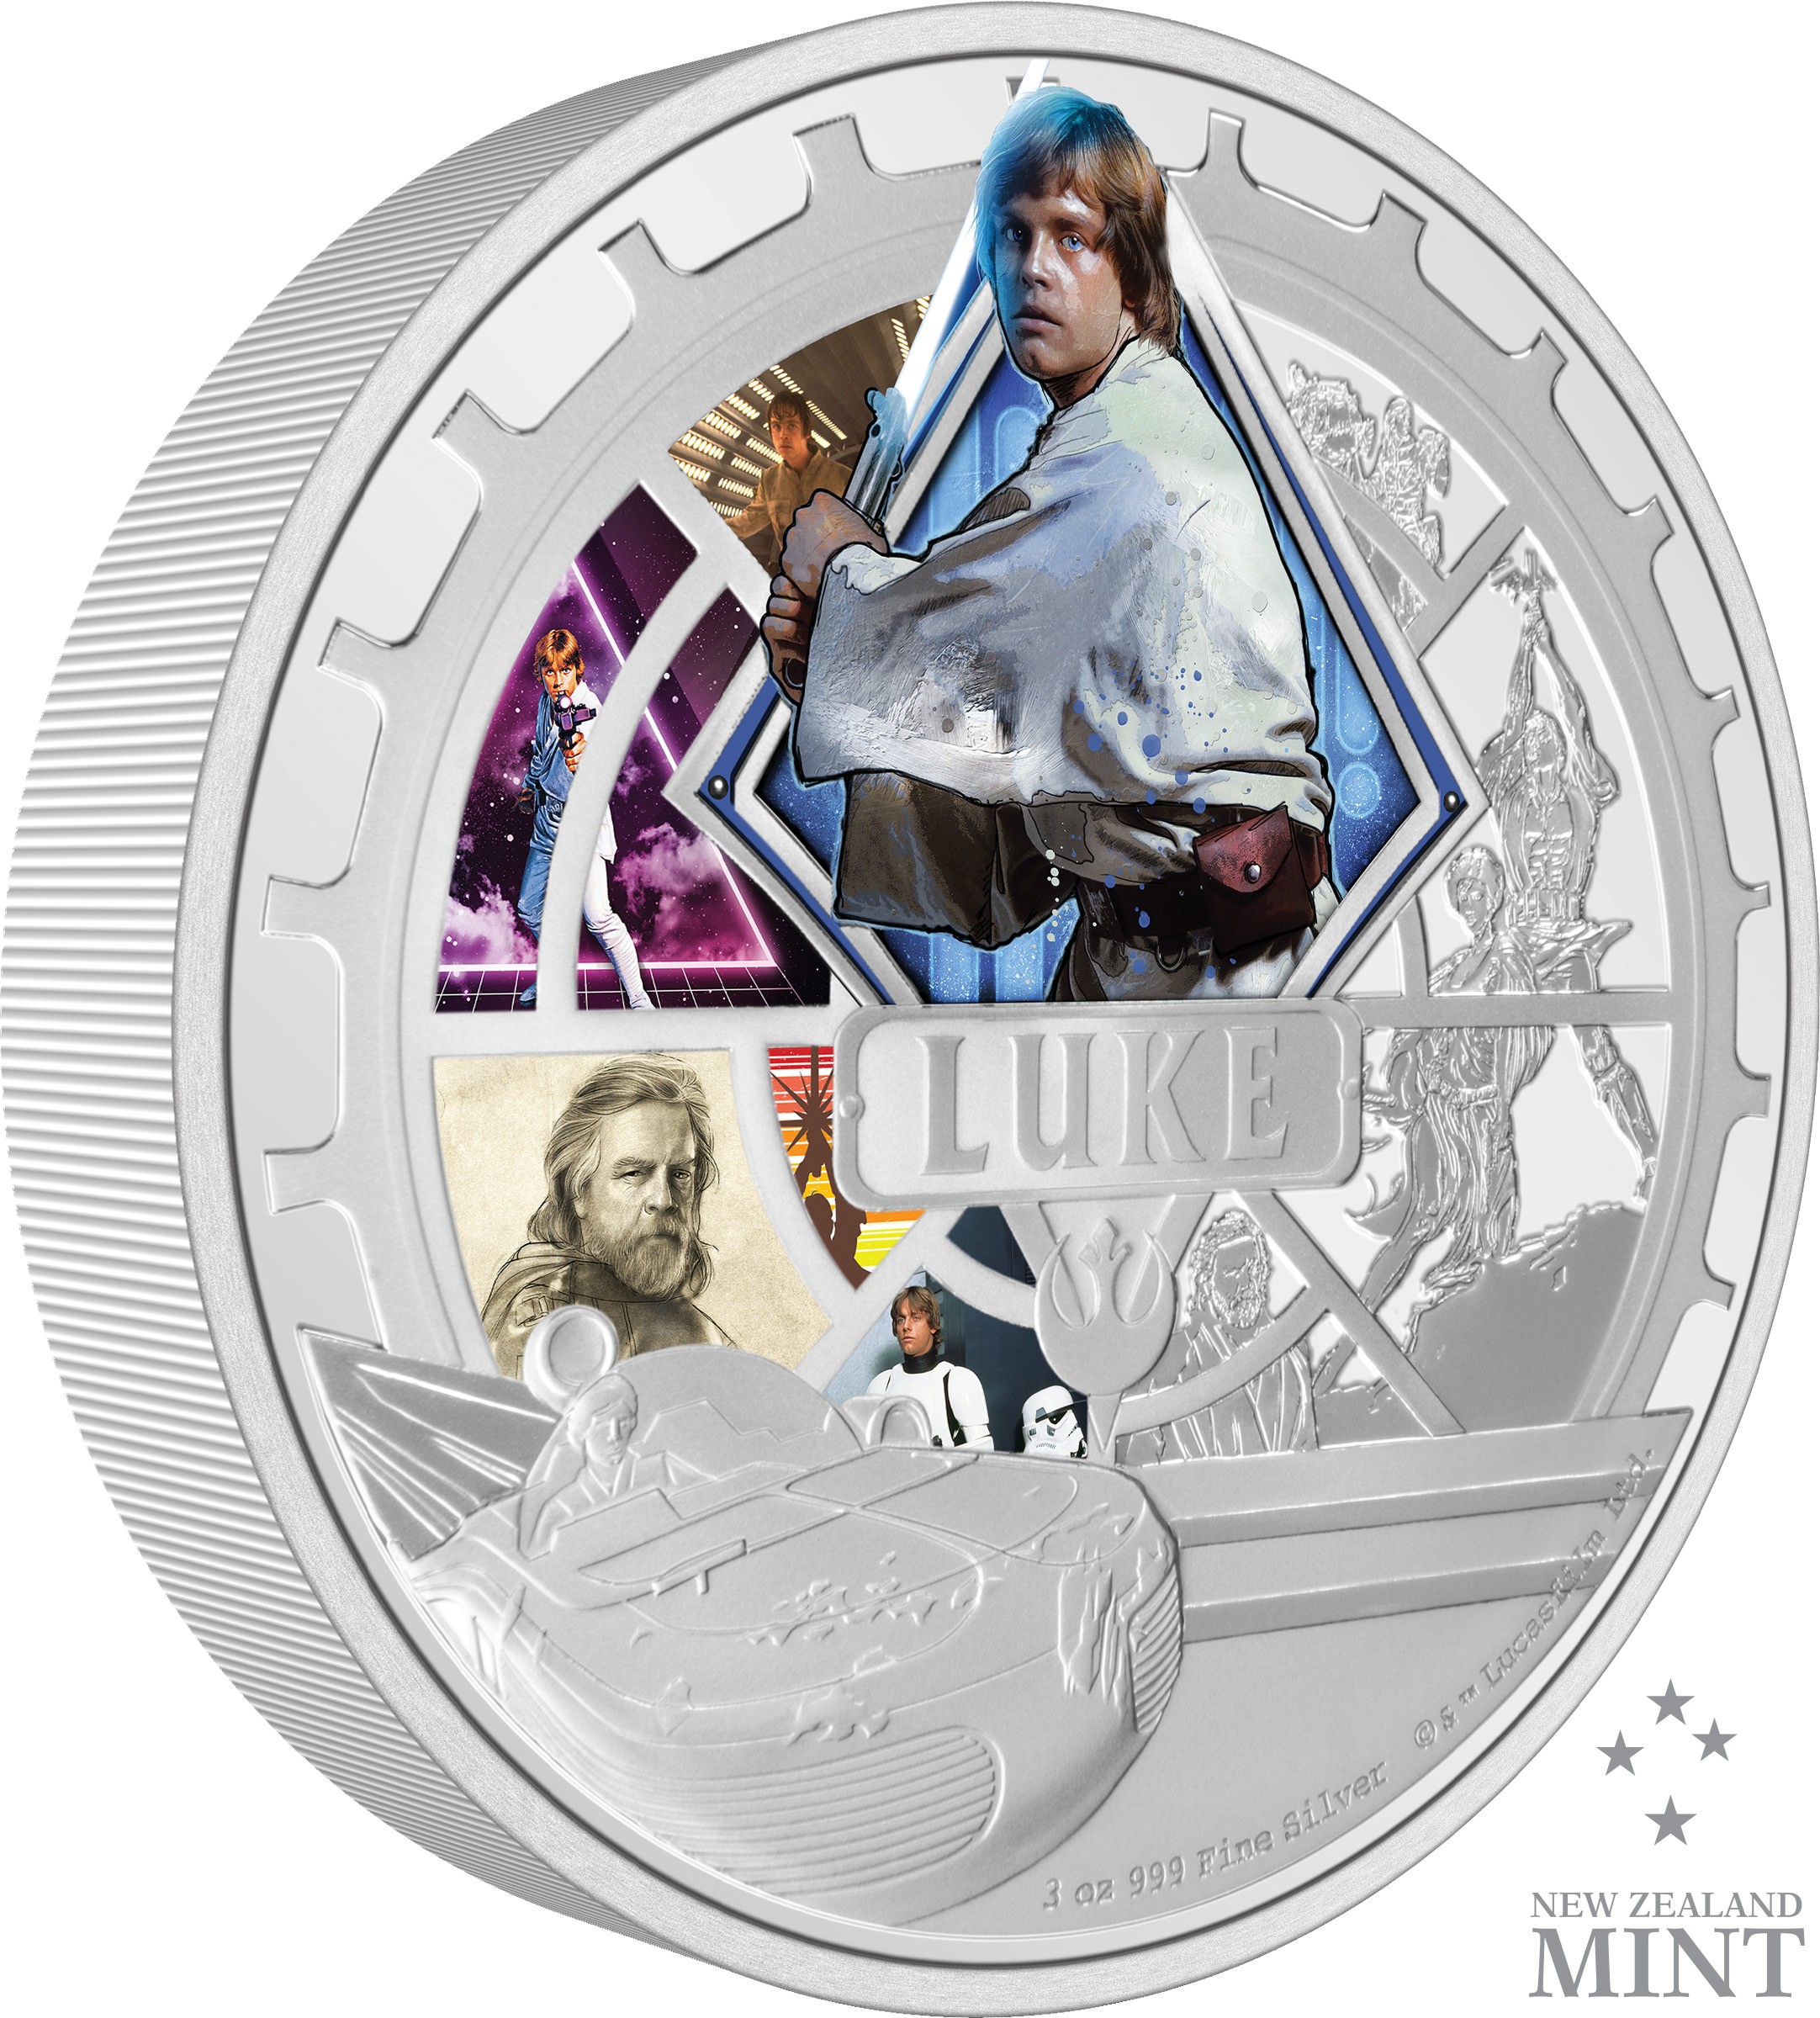 Luke Skywalker™ 3oz Silver Coin (Prototype Shown) View 4